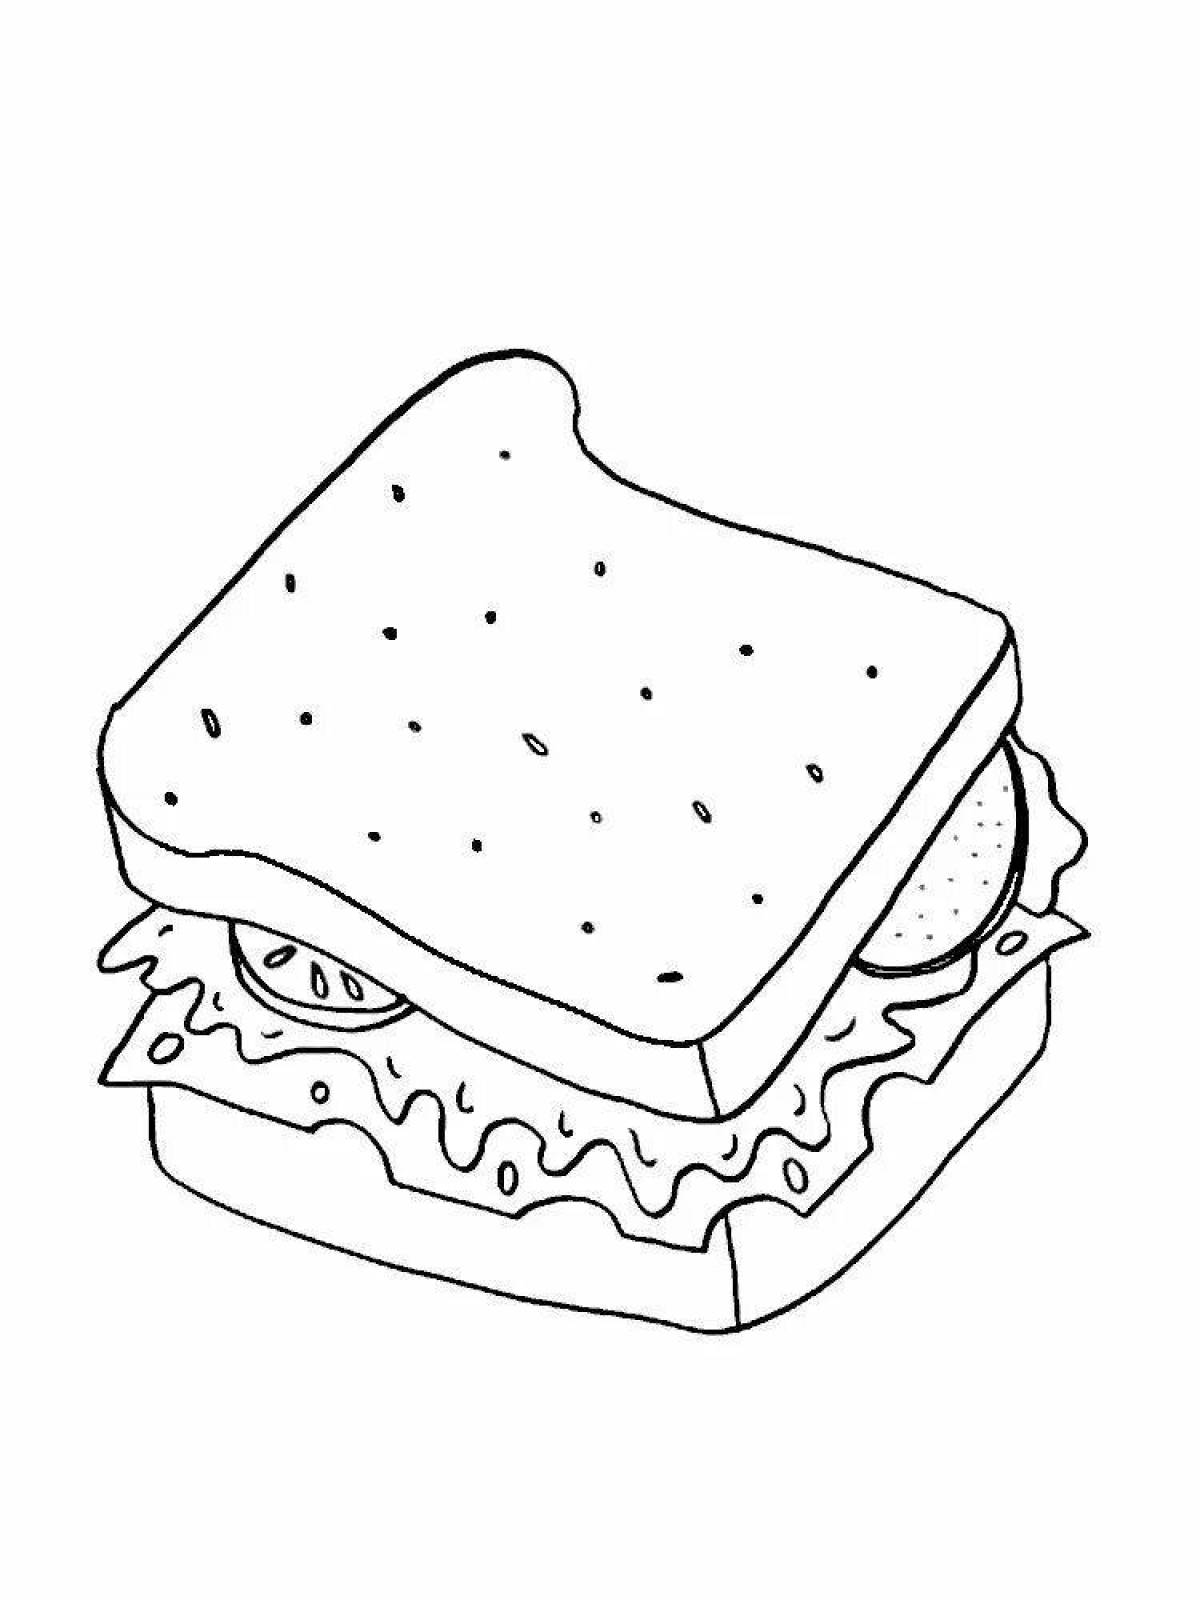 Sandwich #2